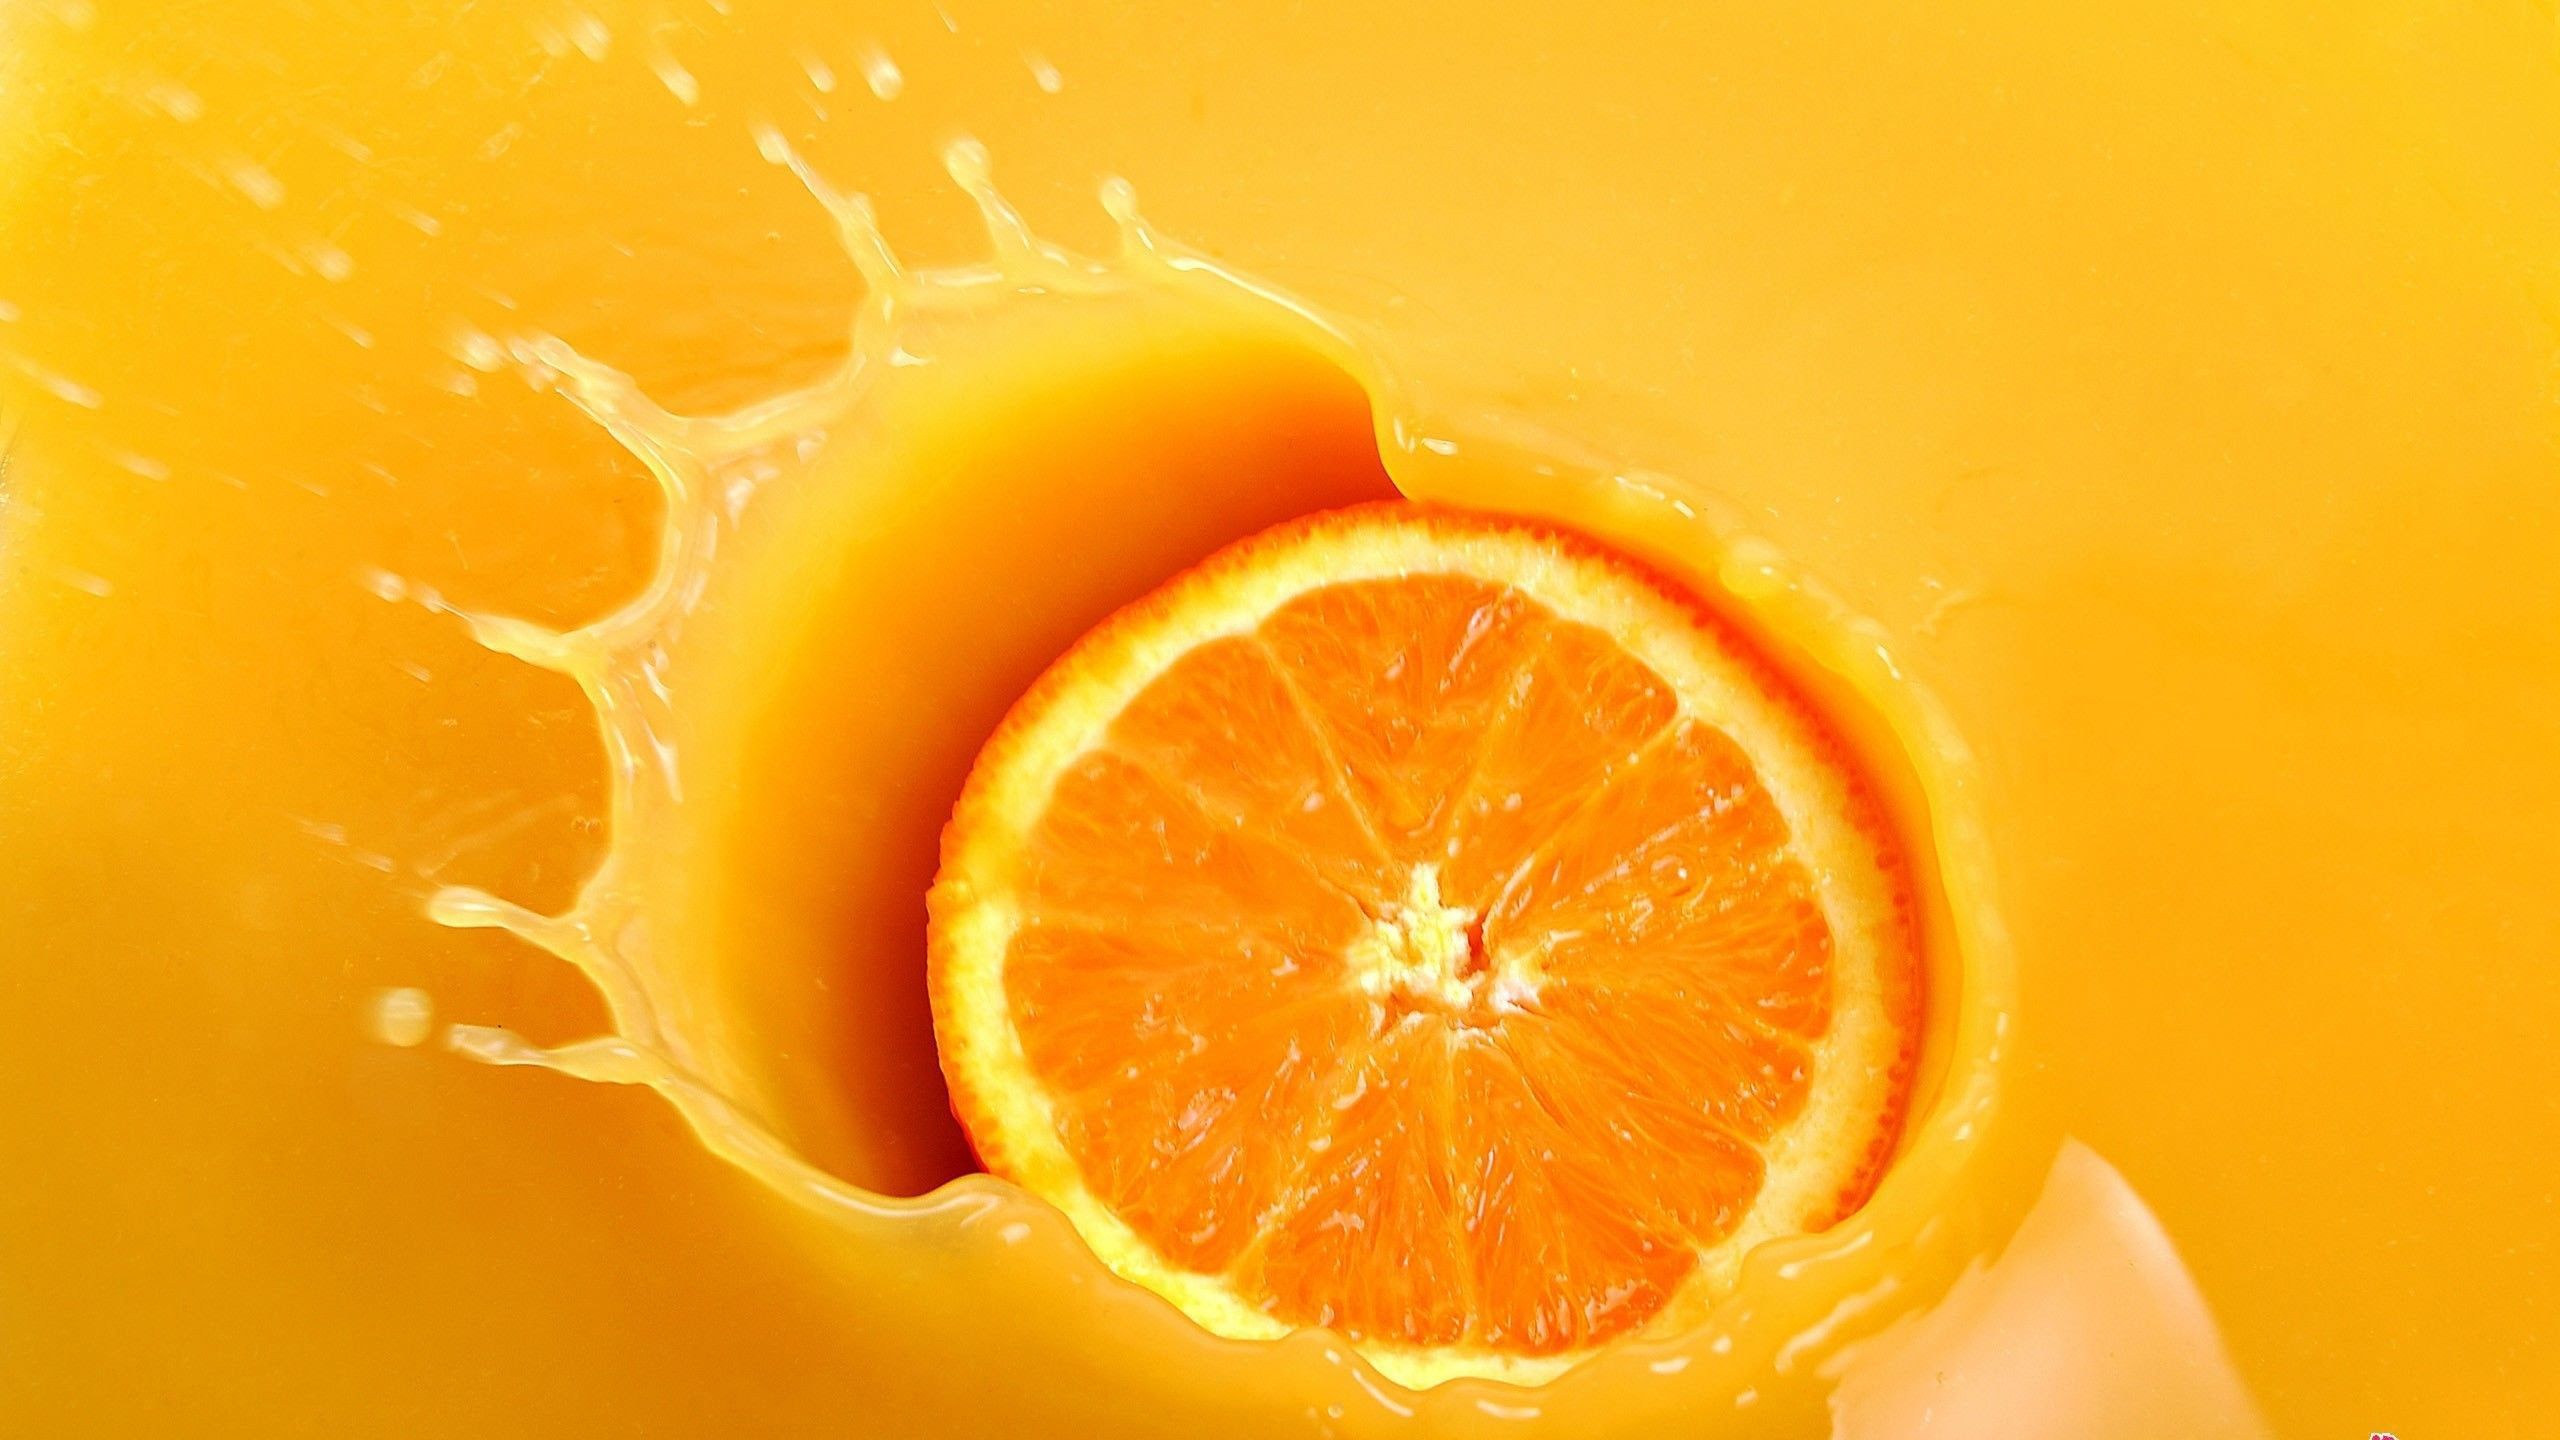 A slice of orange in a glass of orange juice - Fruit